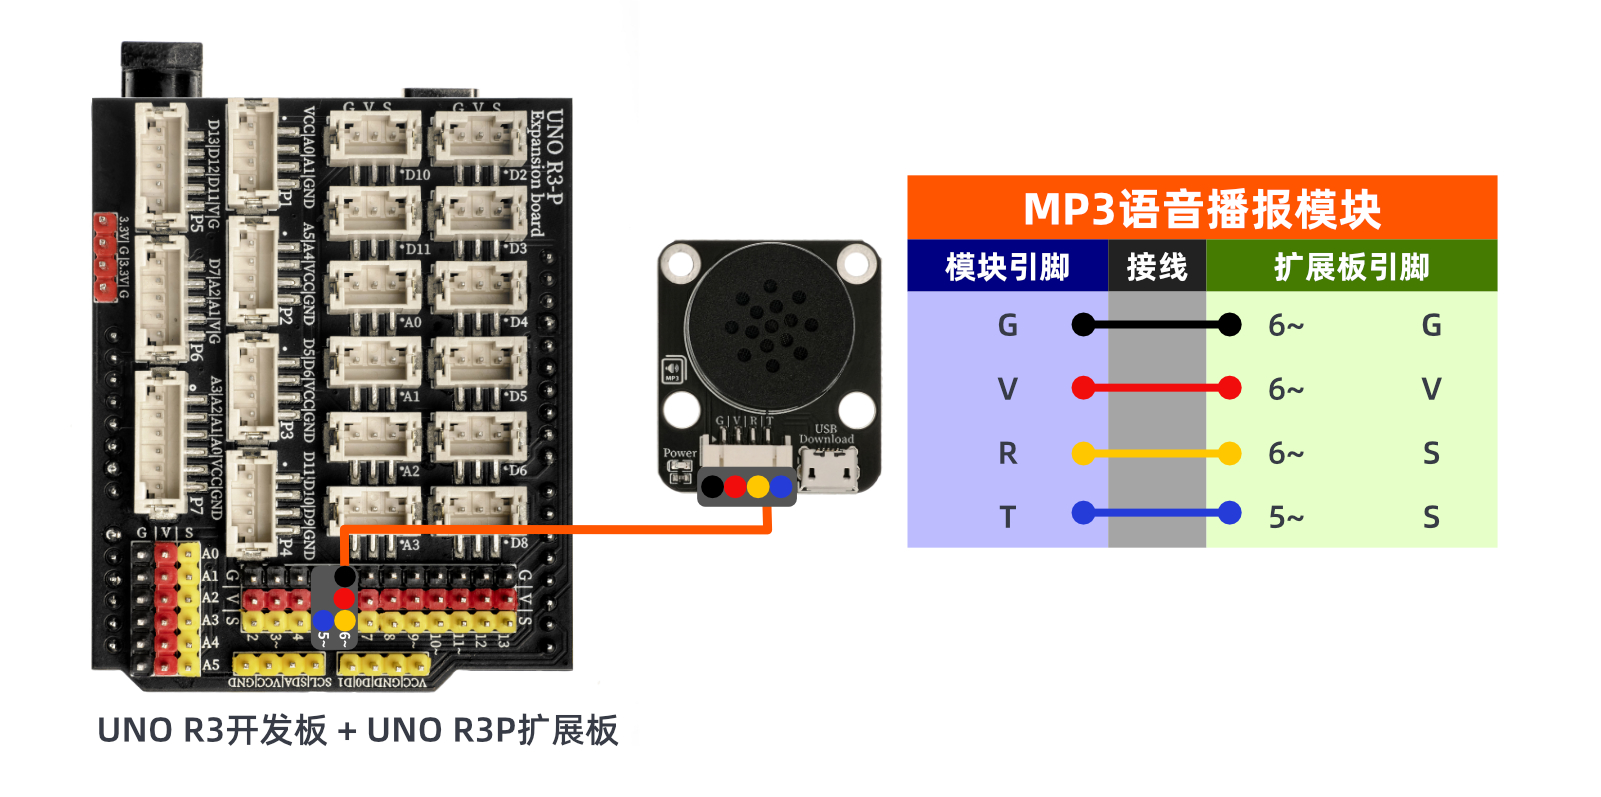 HS-S49PL MP3语音播报模块